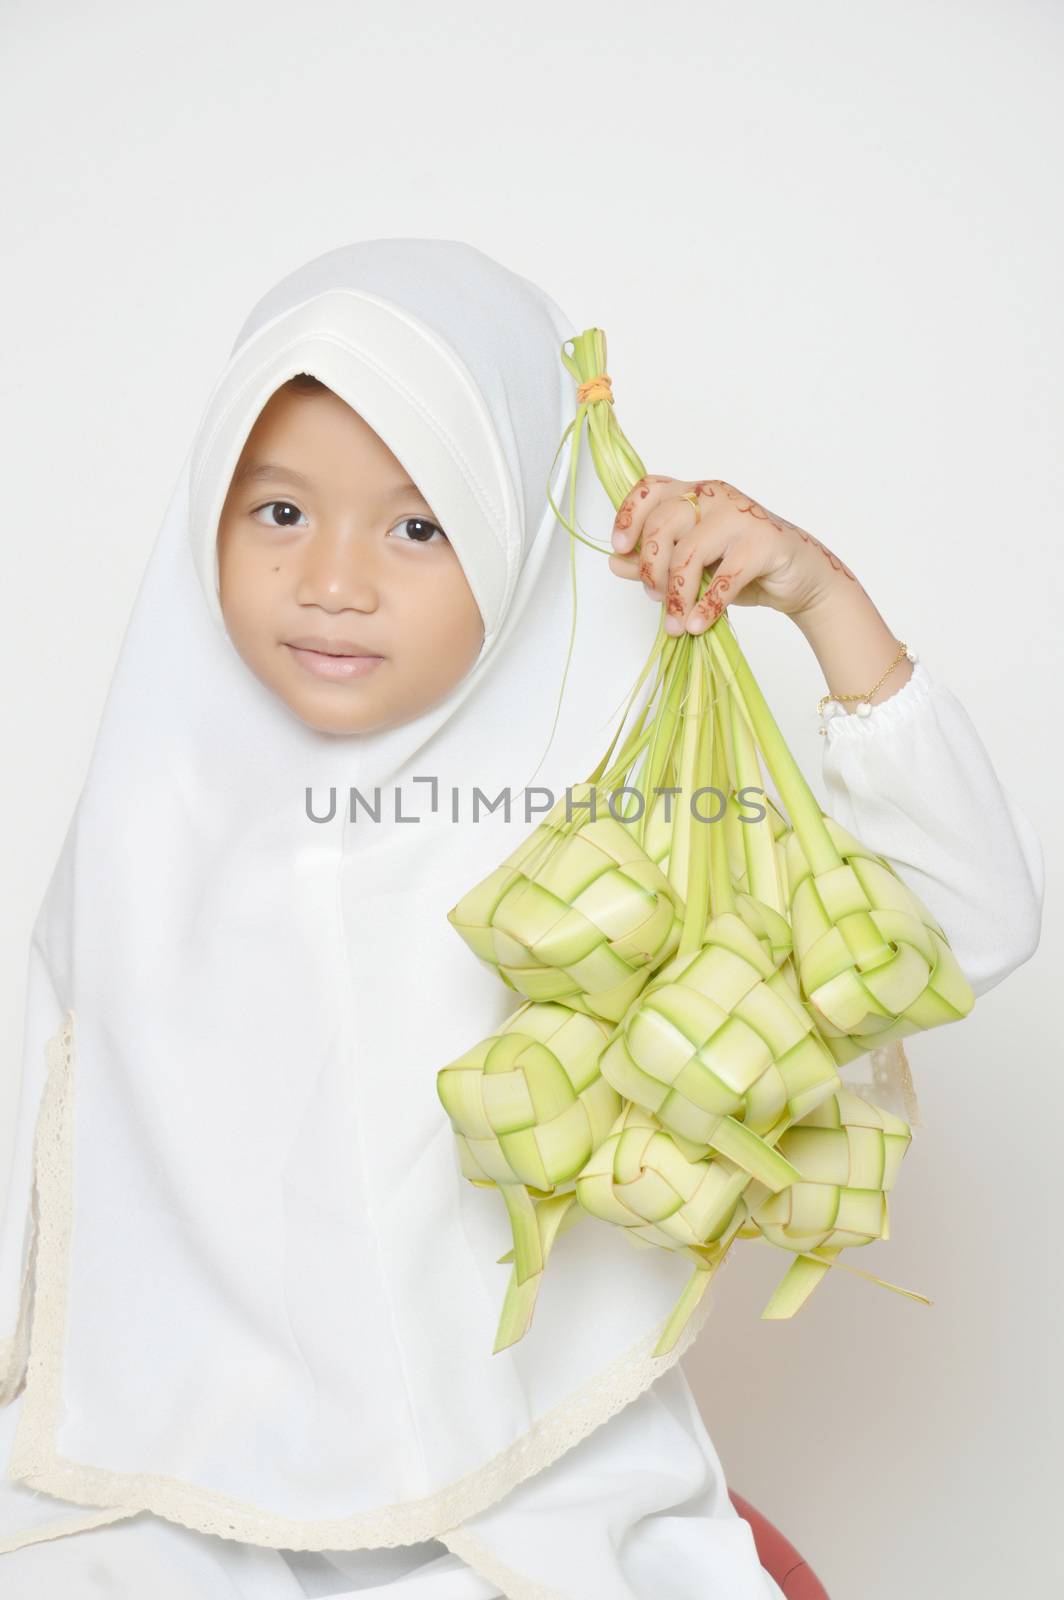 Moslem Asian little girl by antonihalim